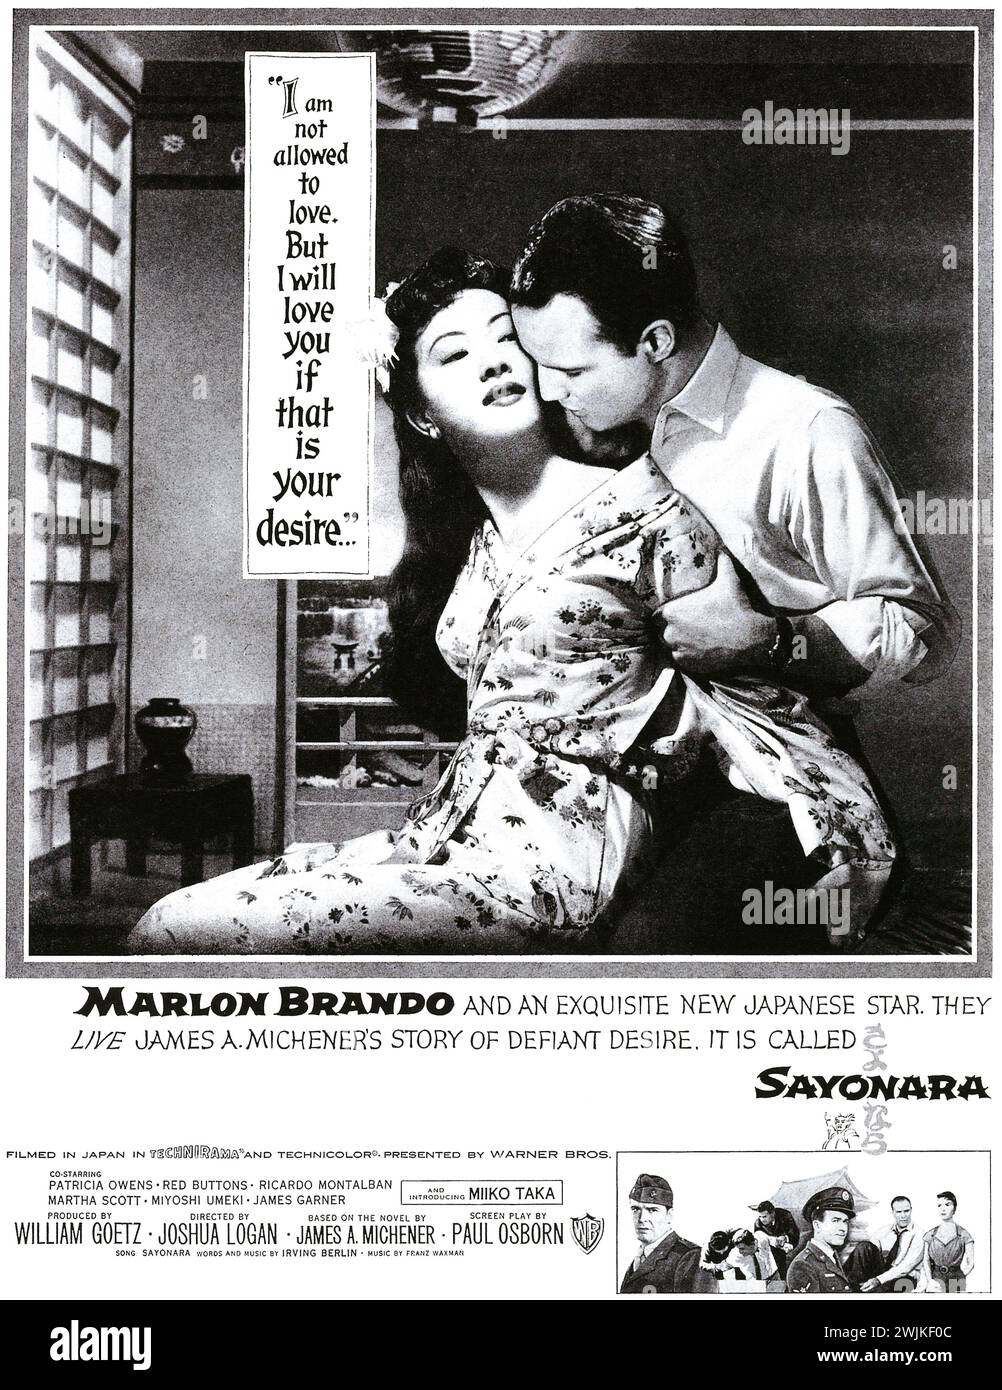 1957 Sayonara American romantic drama film directed by Joshua Logan with Marlon Brando and Miiko Taka. Film print ad and poster Stock Photo